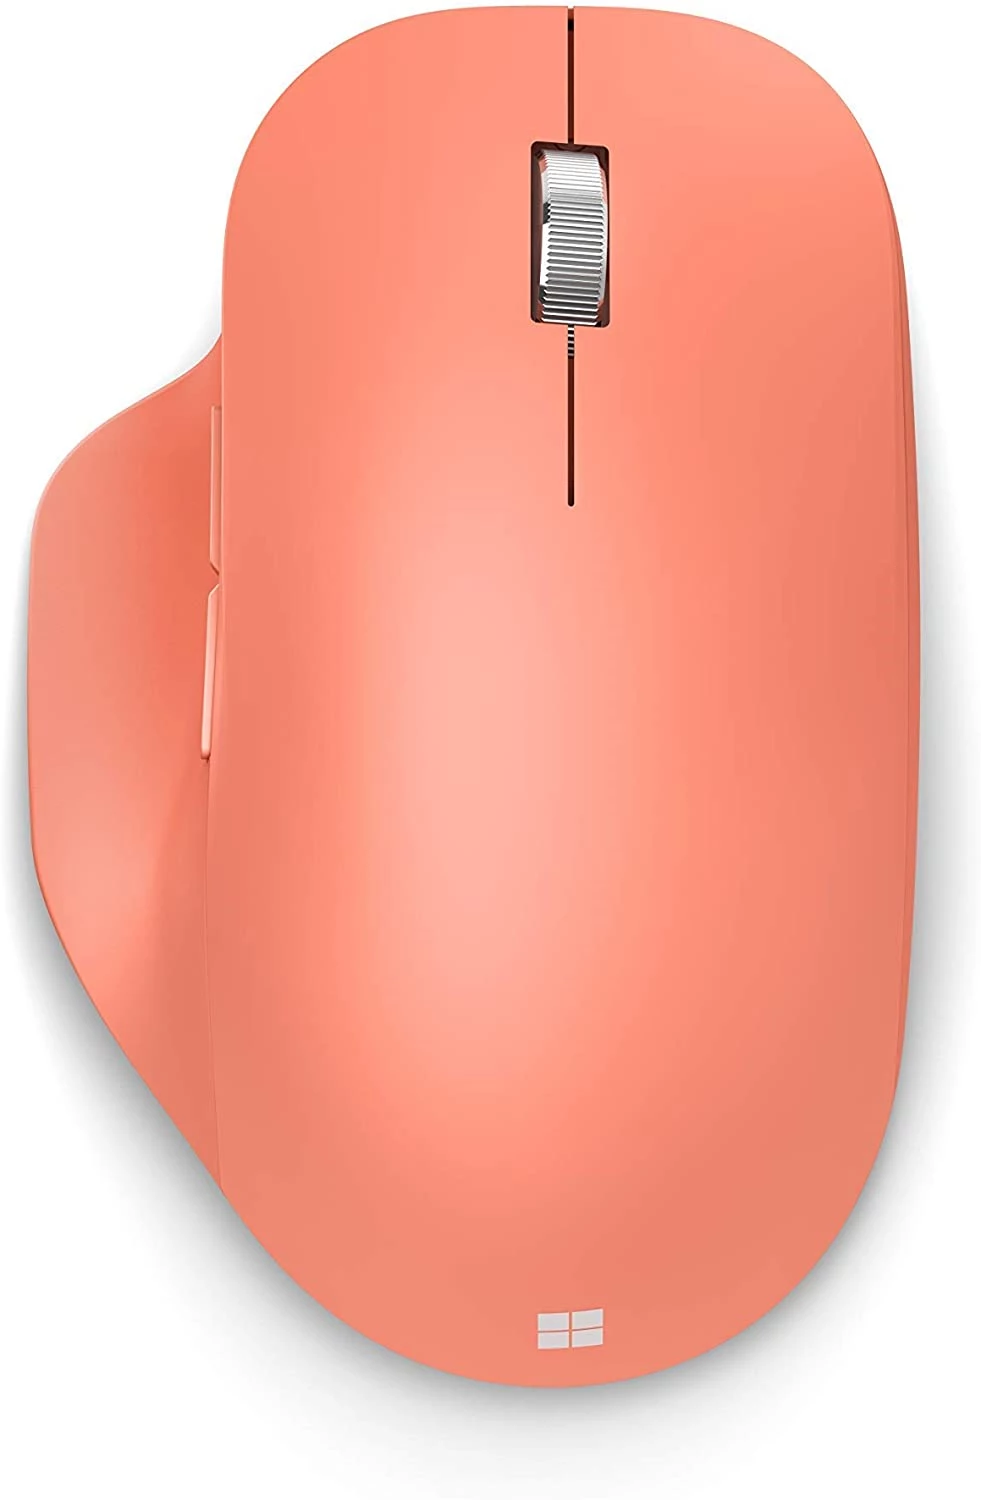 Microsoft Bluetooth Ergonomic Mouse (Peach)